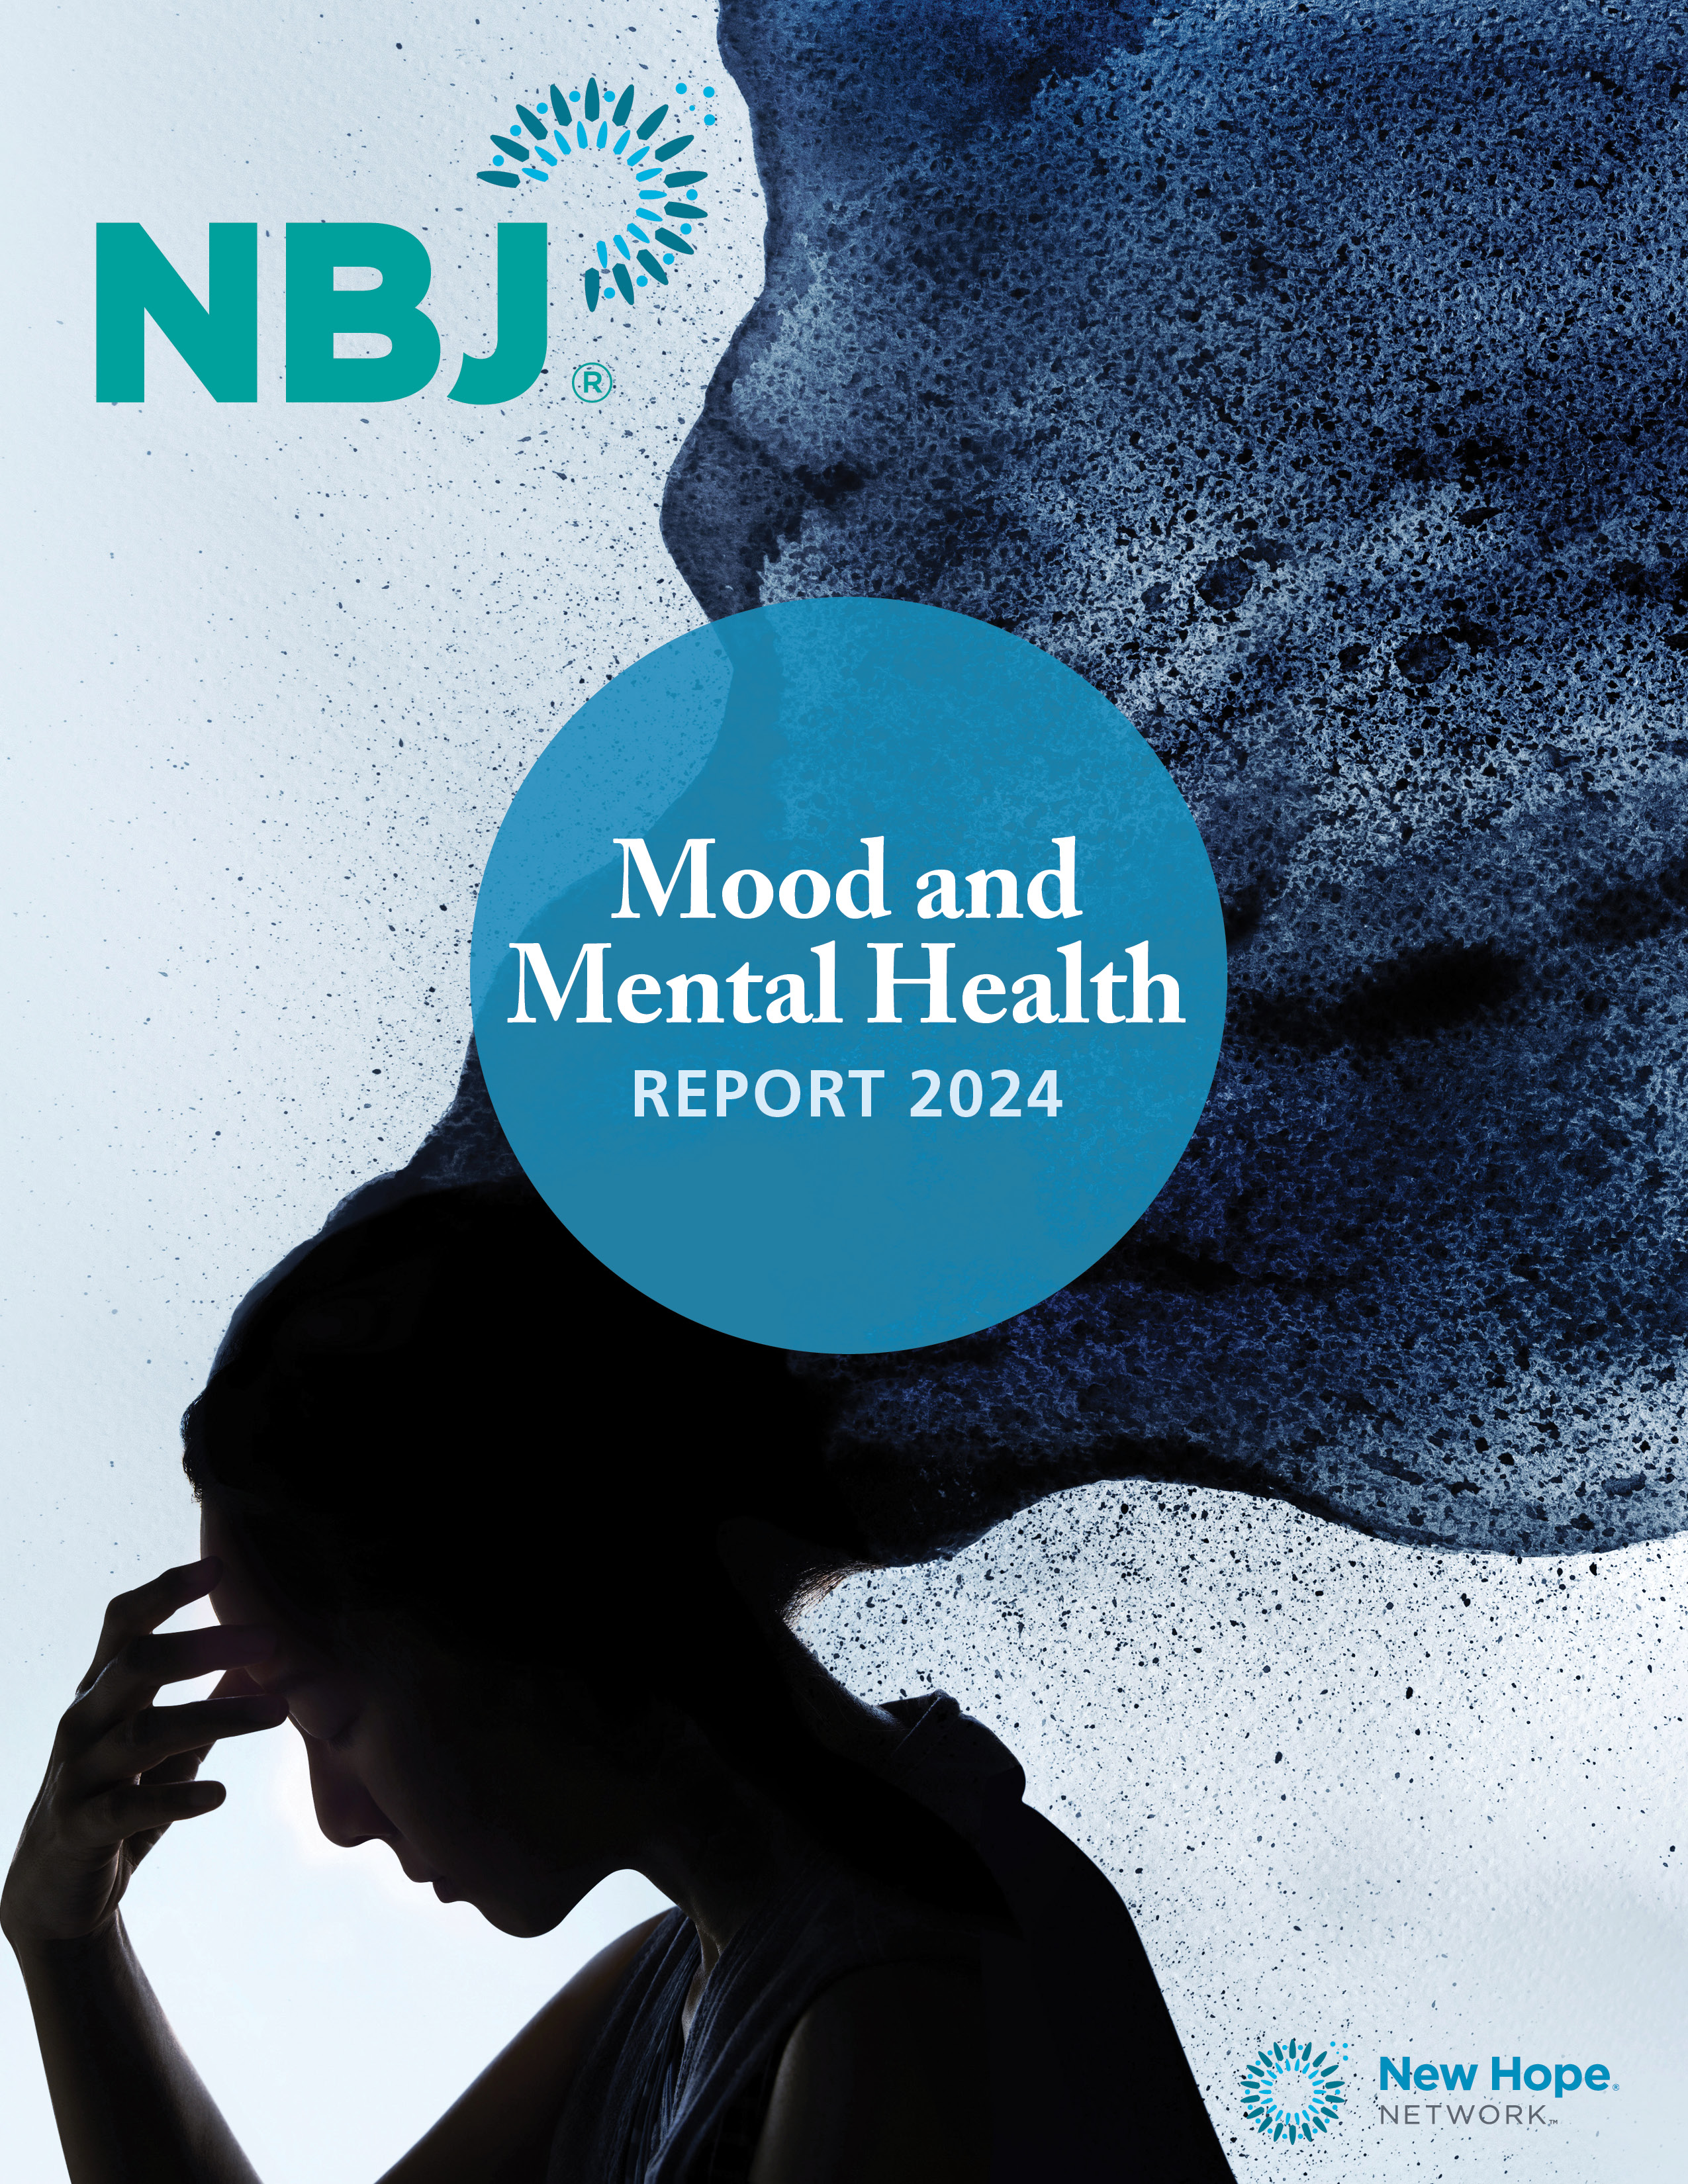 NBJ's Mood and Mental Health Report